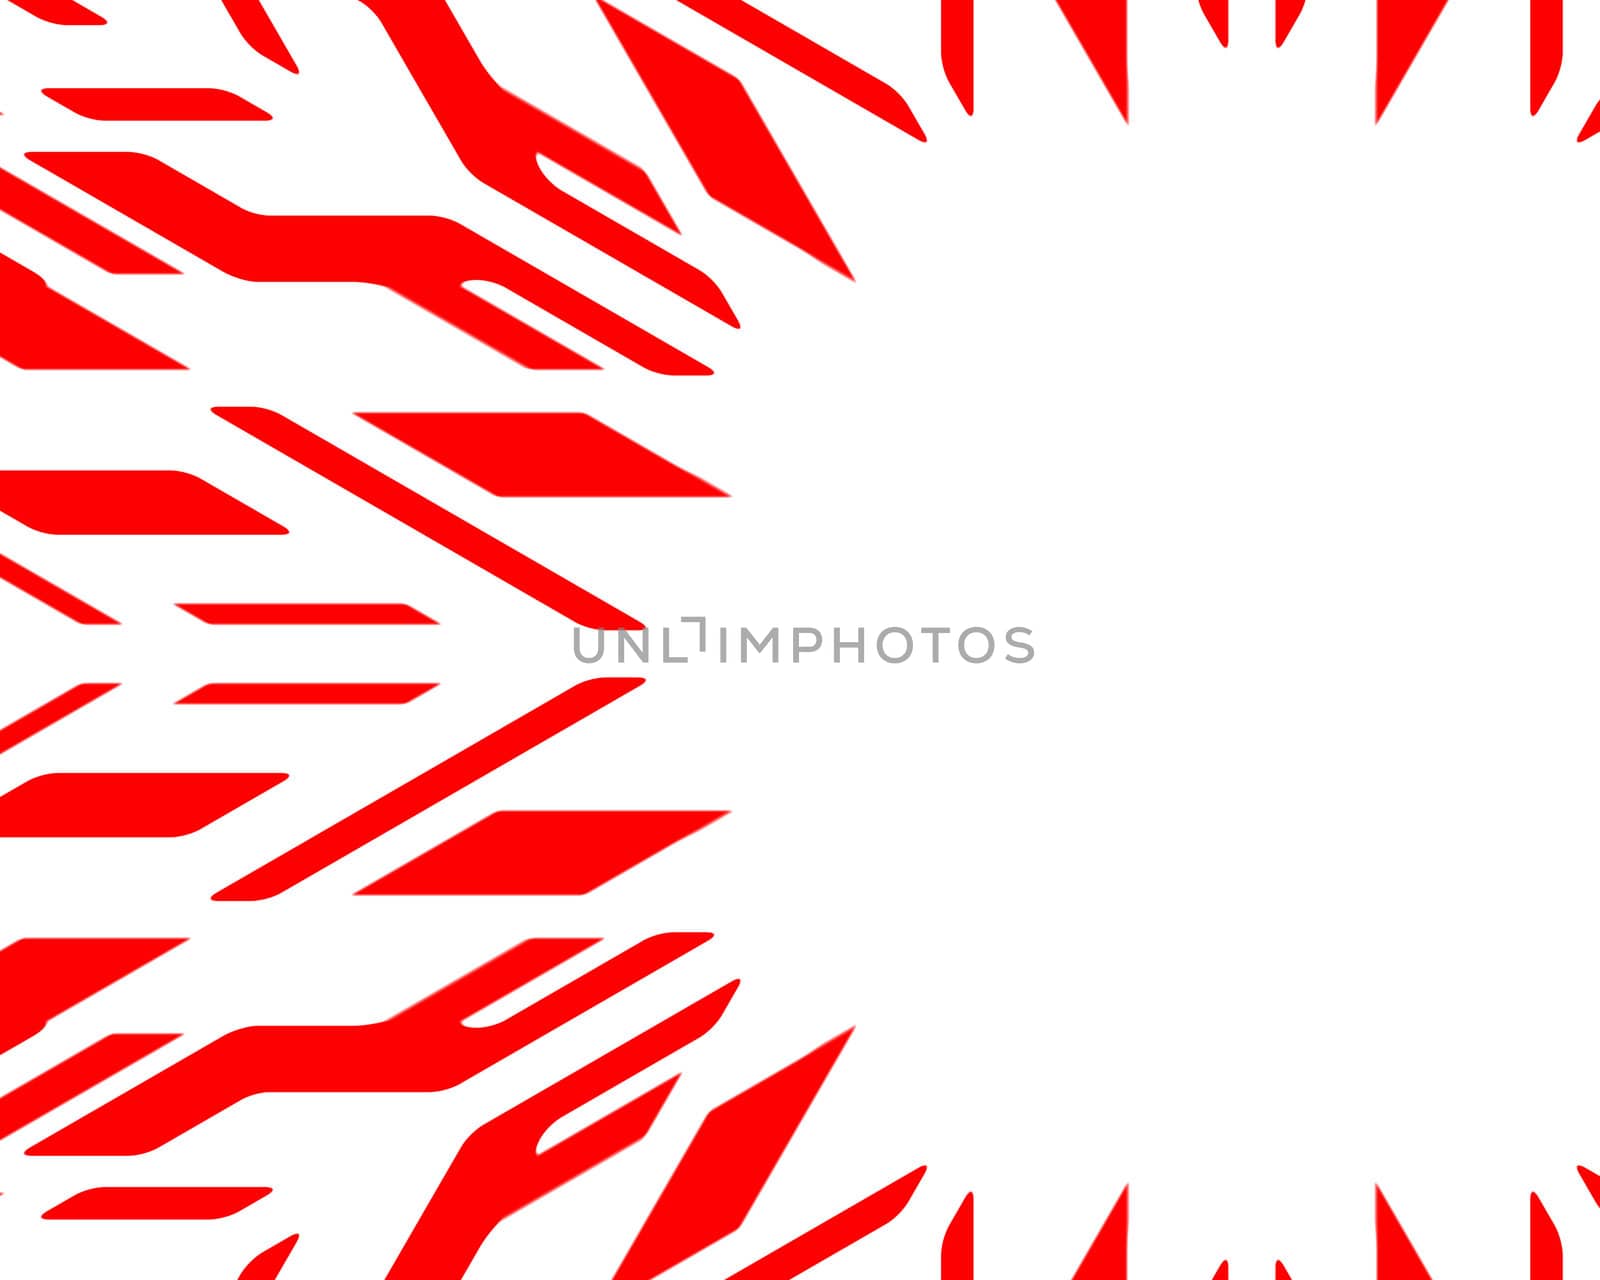 A red geometric arrow shaped sunburst on a white background.